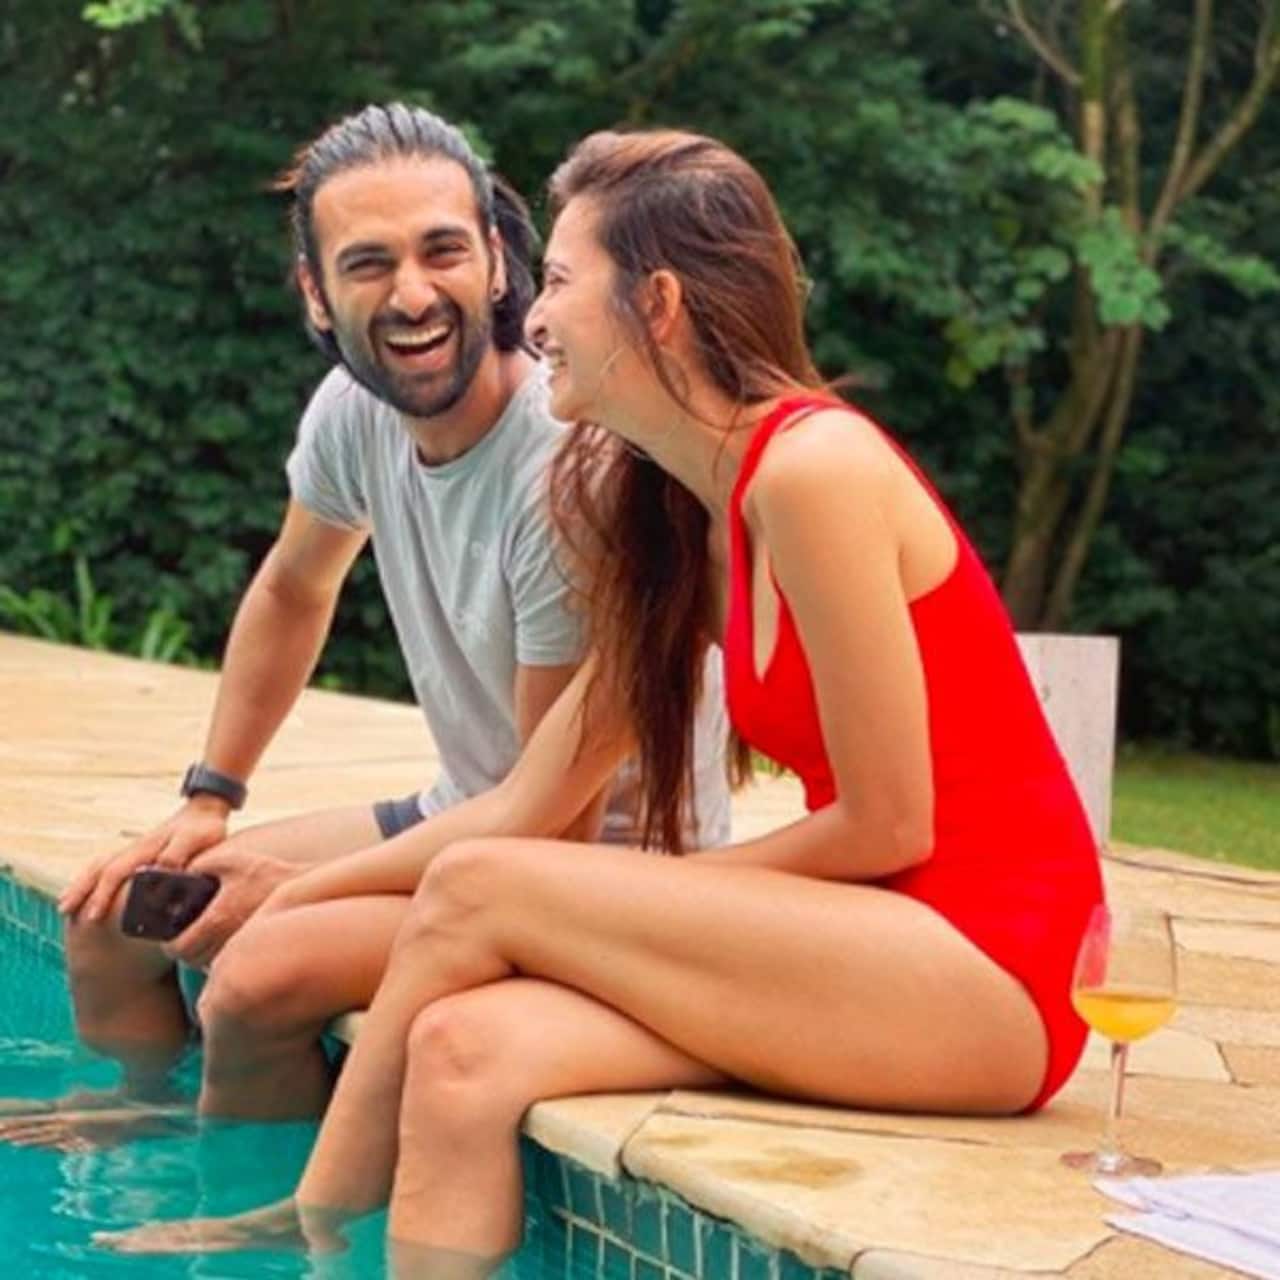 Pulkit Samrat chilling by the poolside with girlfriend Kriti Kharbanda is relationship goals in the lockdown